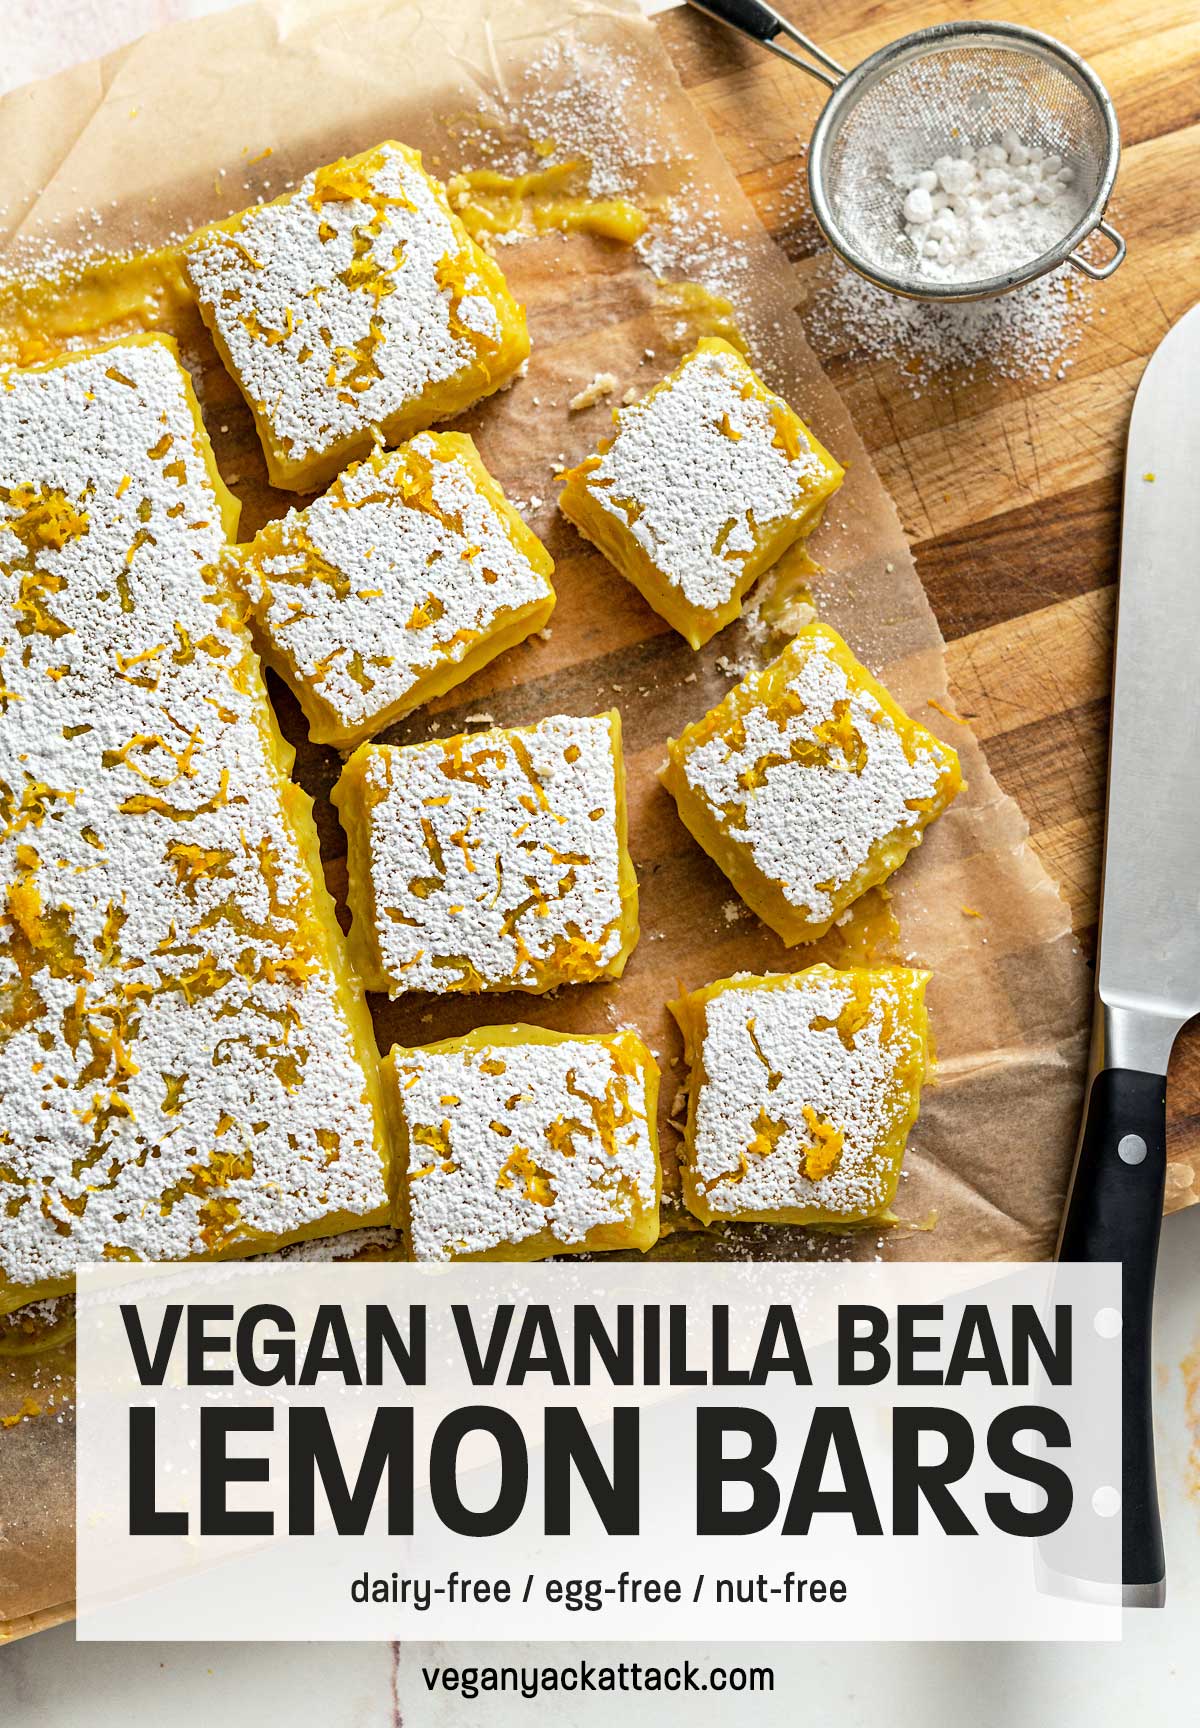 Image of lemon bars cut into squares on a cutting board with text overlay "vegan vanilla bean lemon bars"